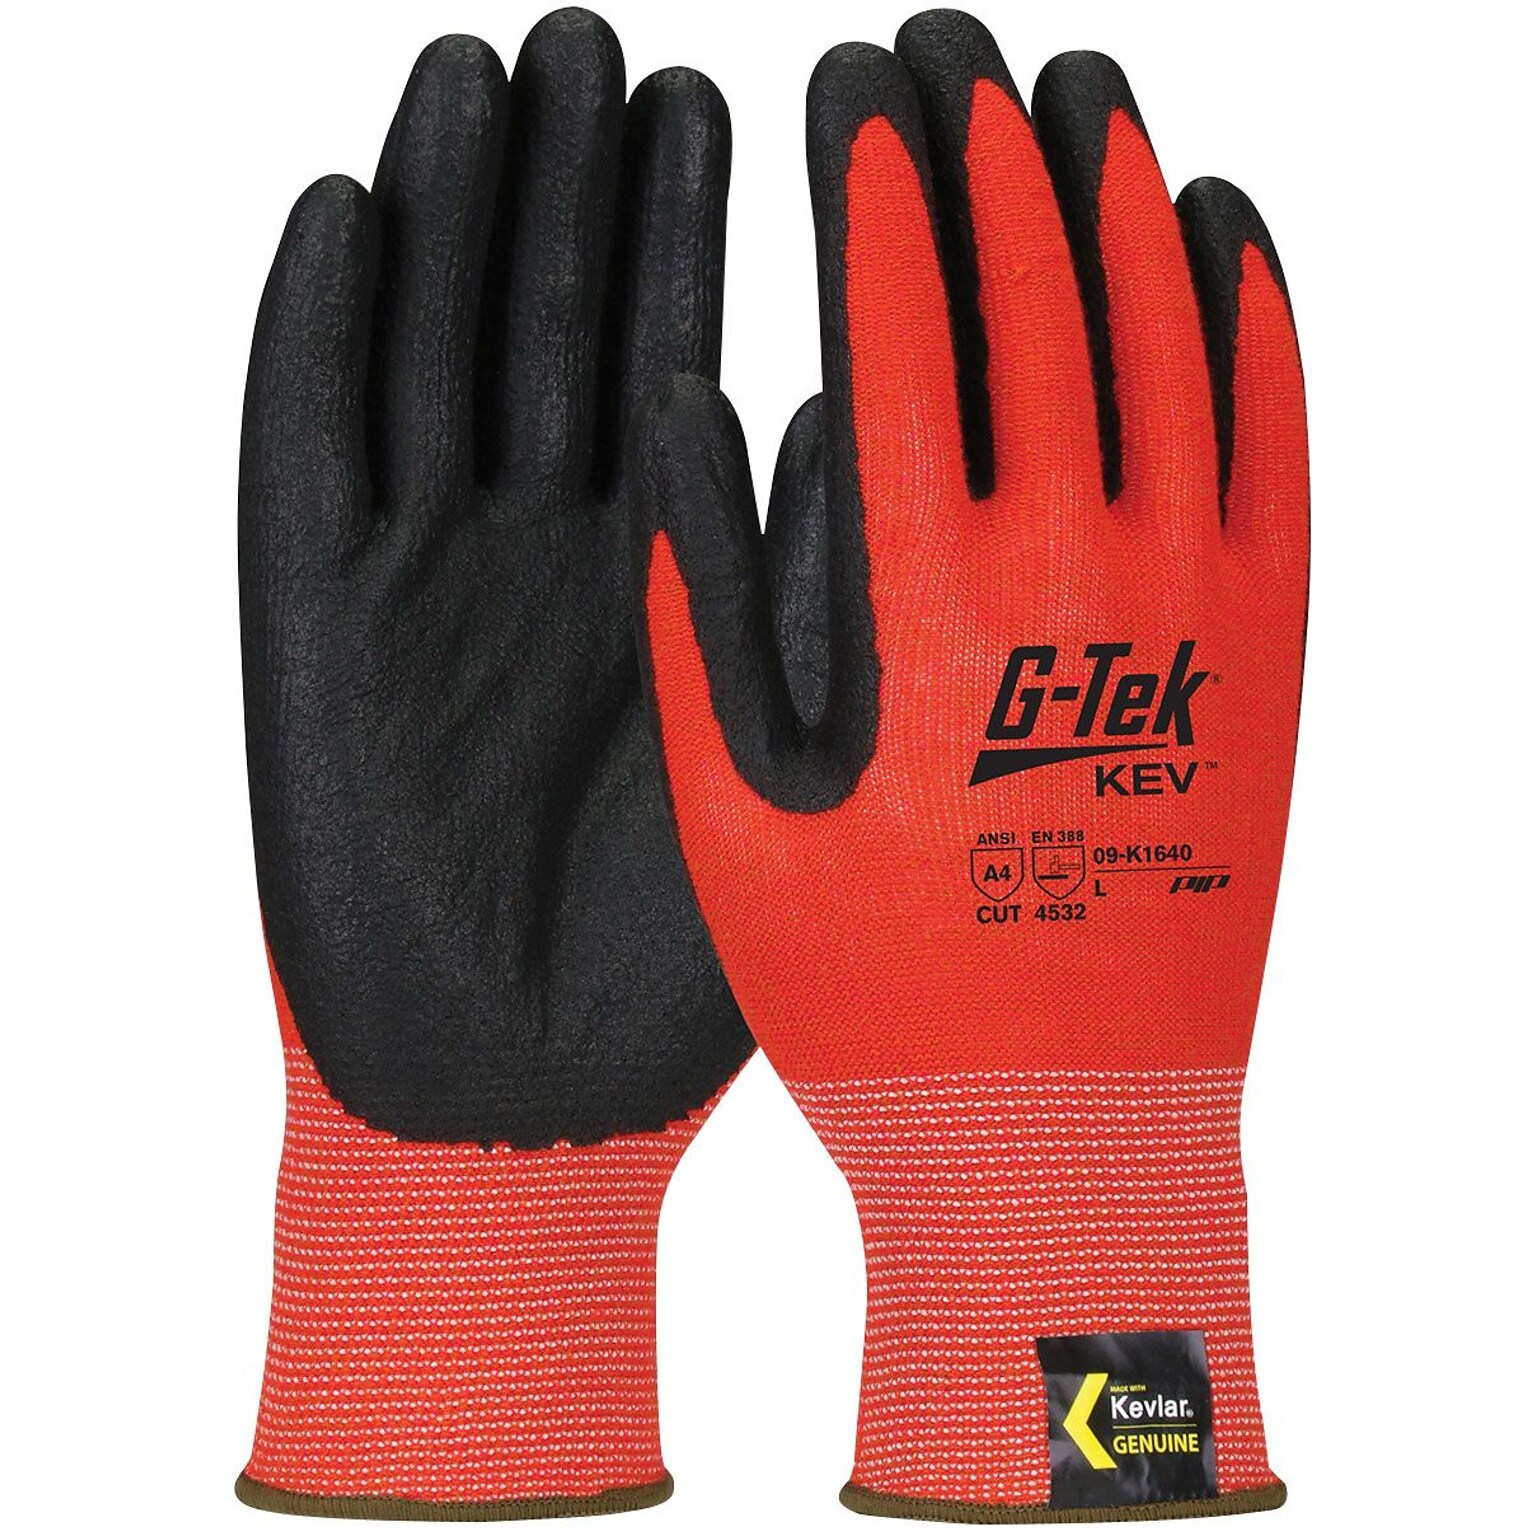 G-Tek KEV Nitrile Foam Work Gloves, Kevlar Engineered Yarn, Red, XXL, 1 Pair (09-K1640/XXL)